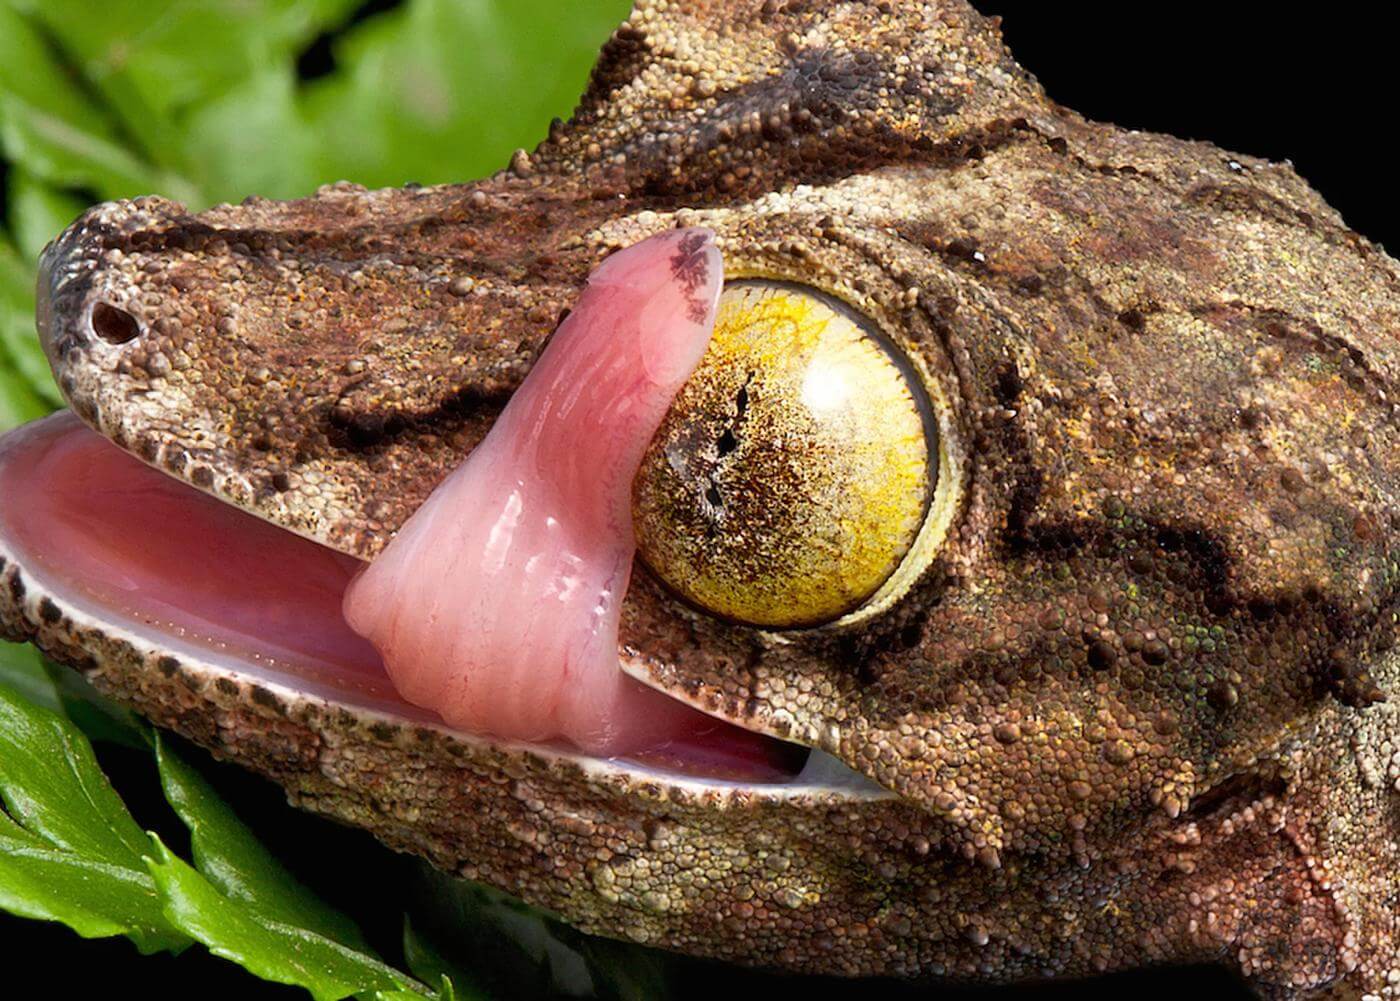 Warna mata tokek ekor daun berlatar belakang emas, perak atau cokelat yang ditutupi dengan garis konsentris di sekitar pupil. Tokek ini menggunakan lidah mereka untuk membersihkan bola mata dengan cepat